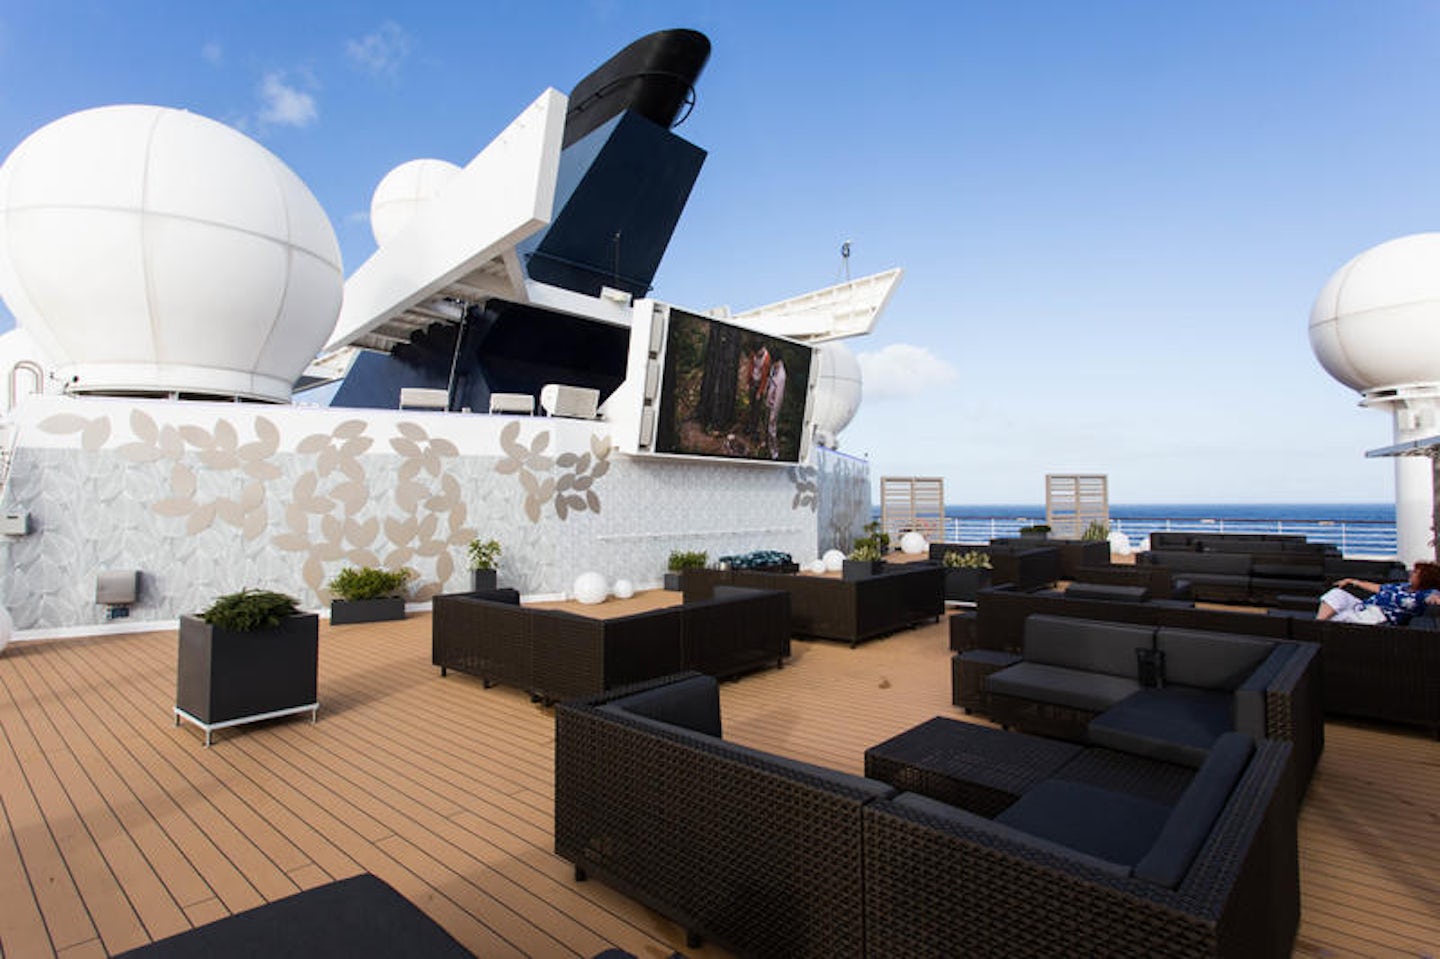 Rooftop Terrace on Celebrity Infinity